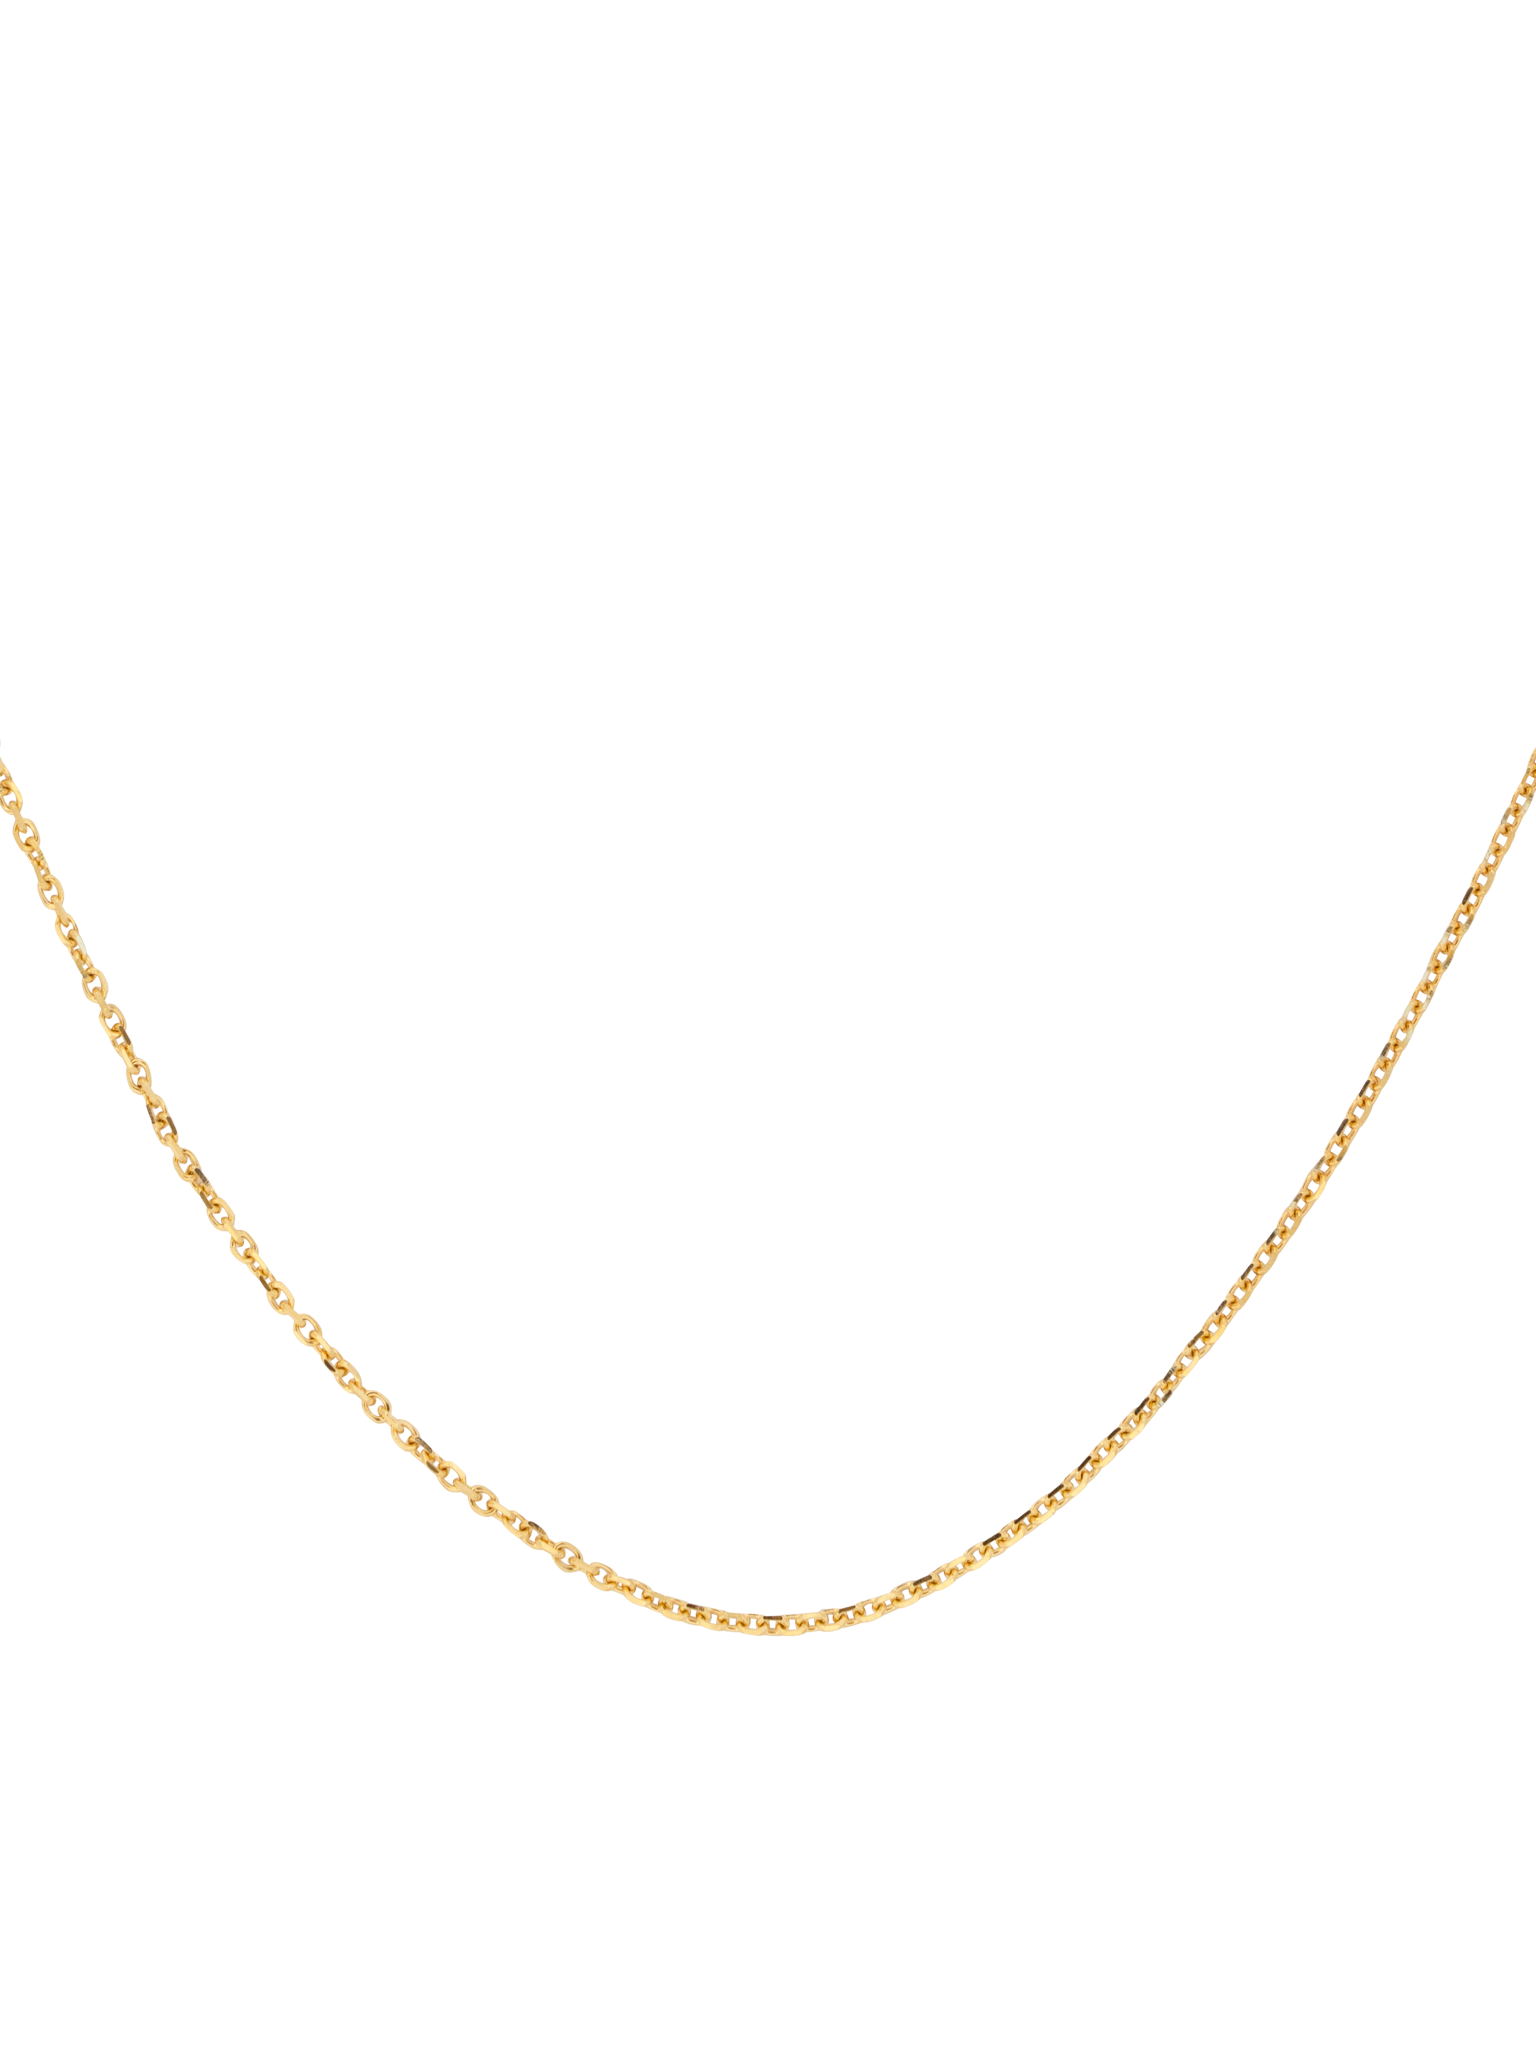 Extra long basic chain necklace photo 3